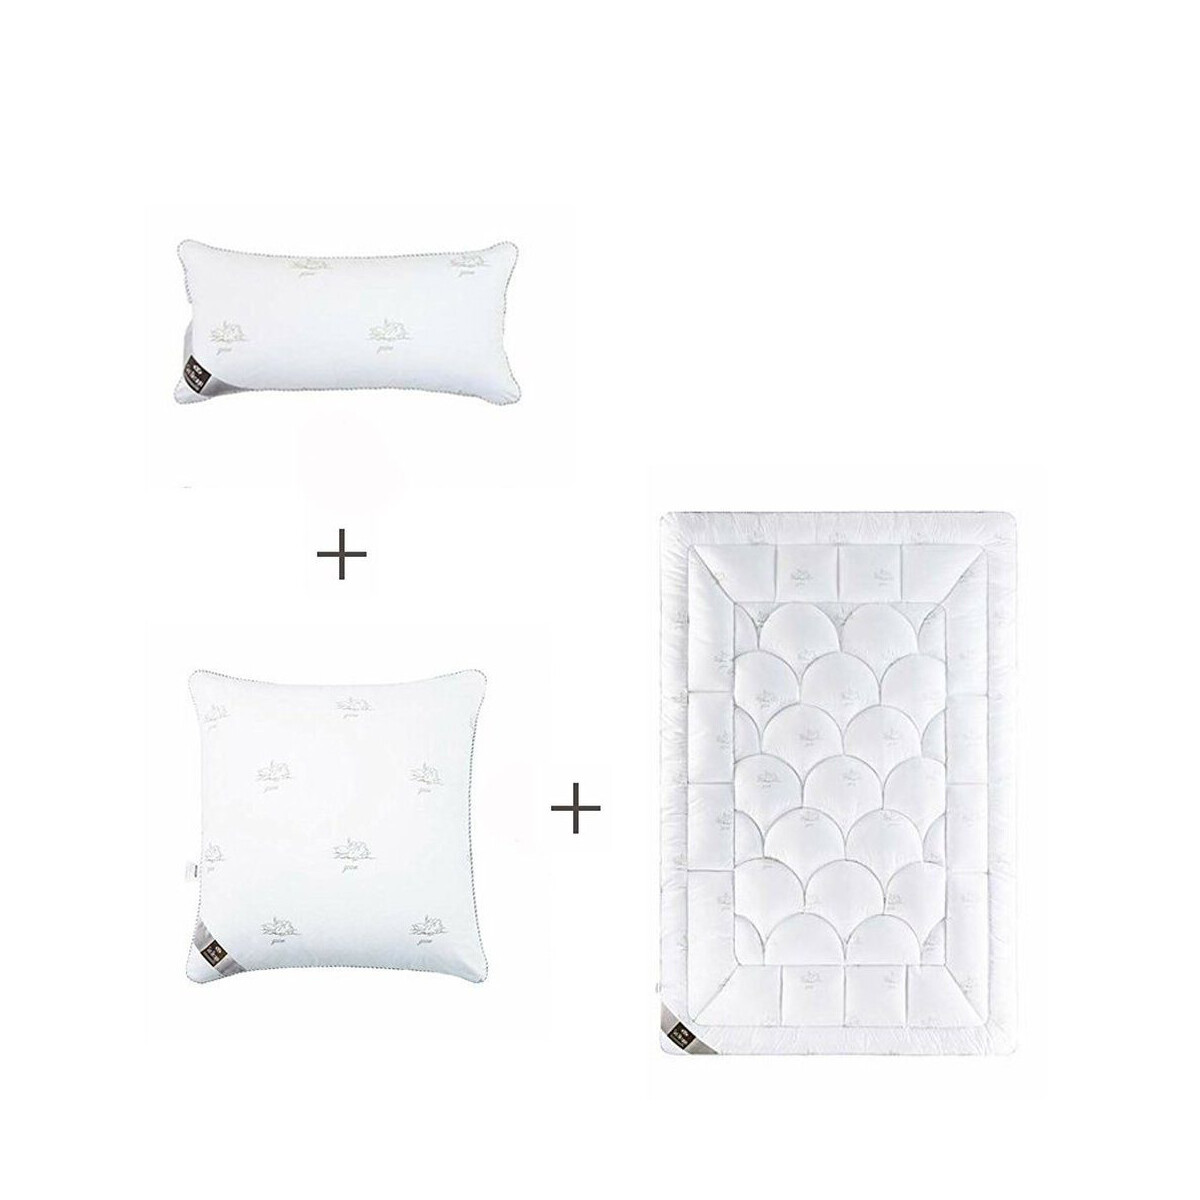 Hochwertige Bettdecken günstig bestellen - Sei Design, 104,90 €